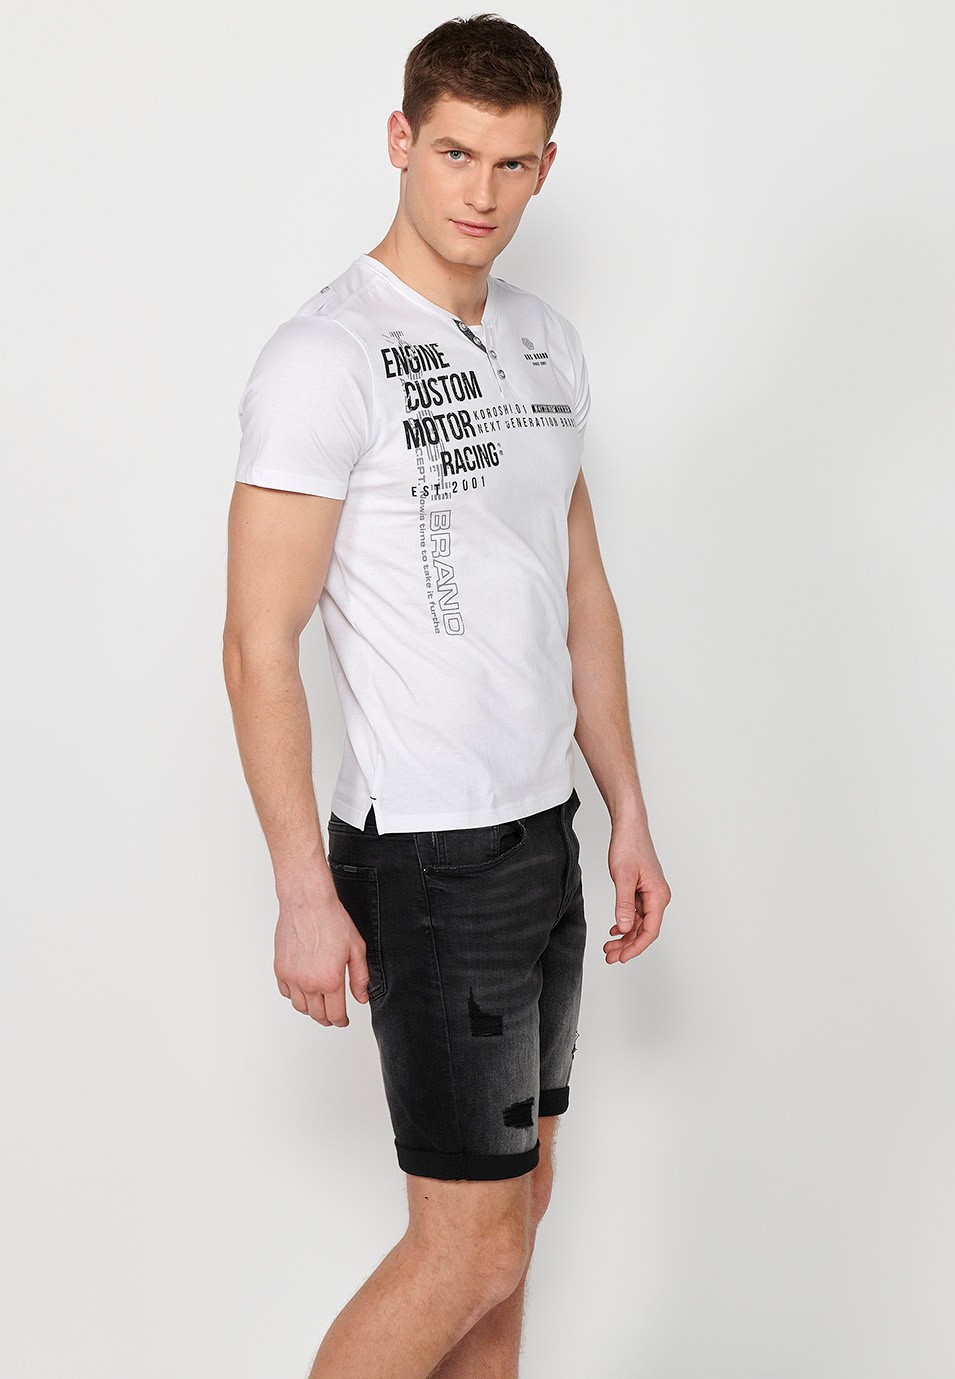 Camiseta de manga corta de algodon, cuello redondo con abertura abotonada, color blanco para hombre